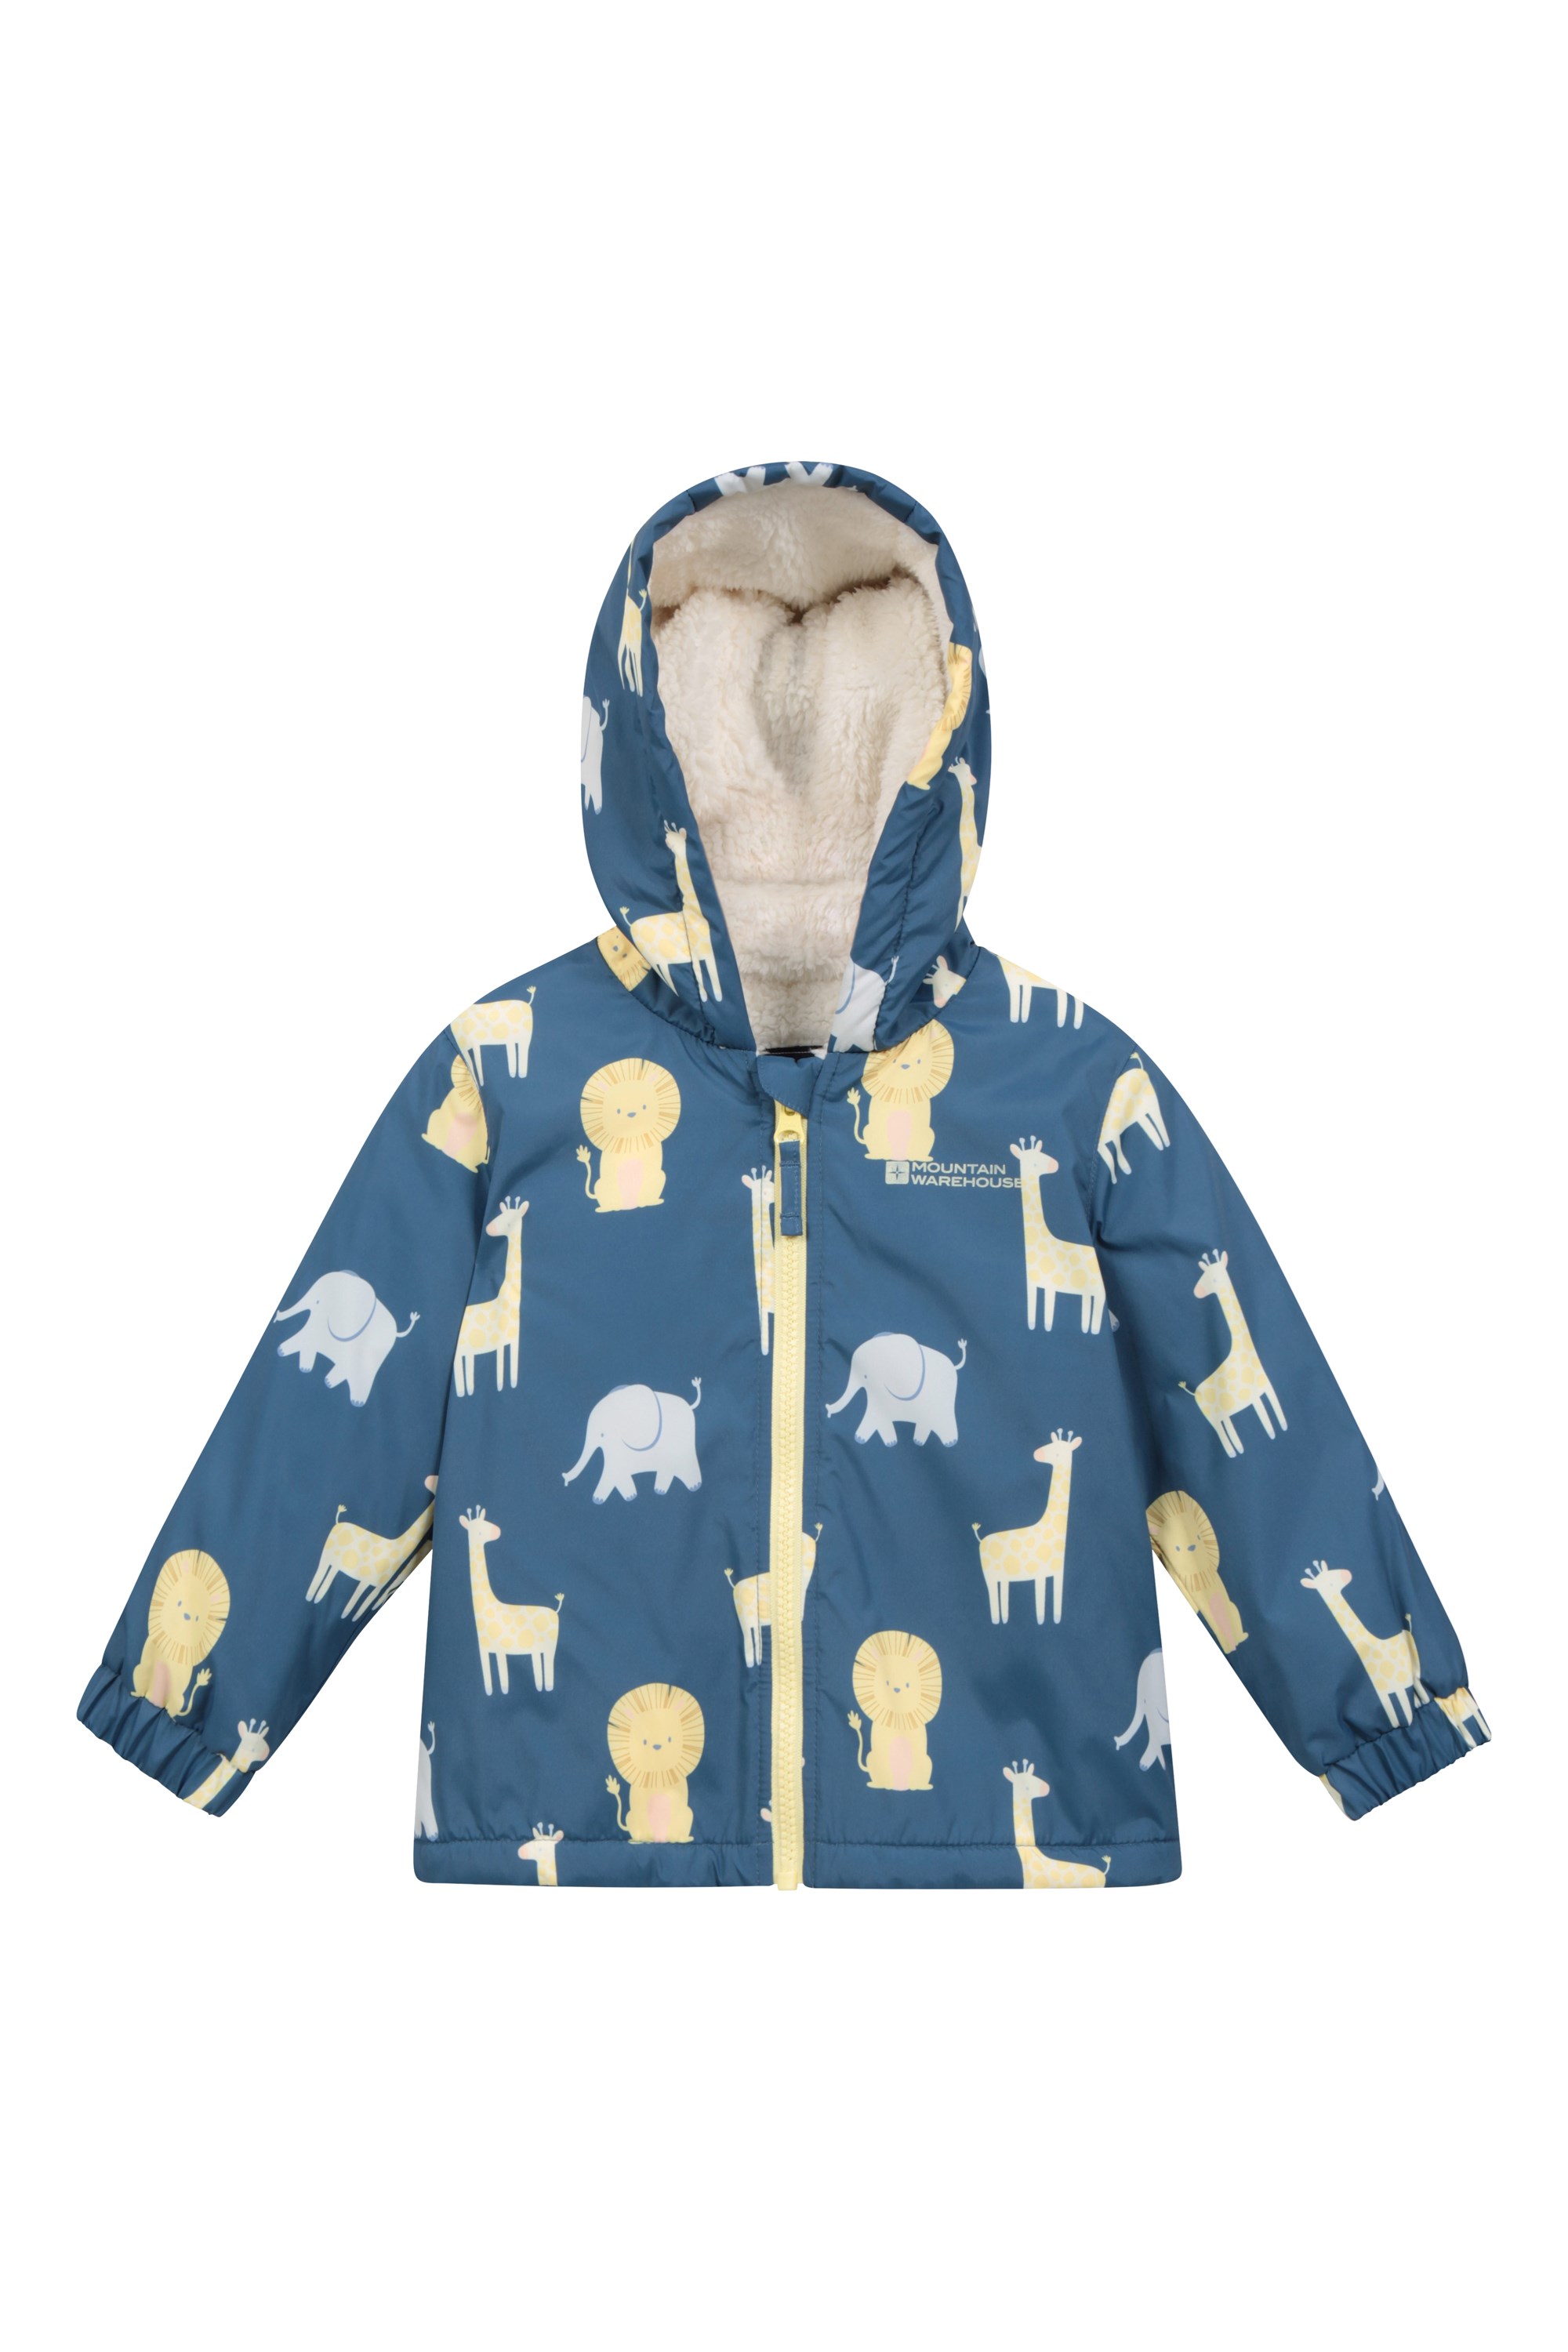 Mountain Warehouse Baby Unisex Popper Fleece Winters Warm Jacket Warm & Cosy Toddler Warm Coat Regular Use Kids Jacket Lightweight Breathable 